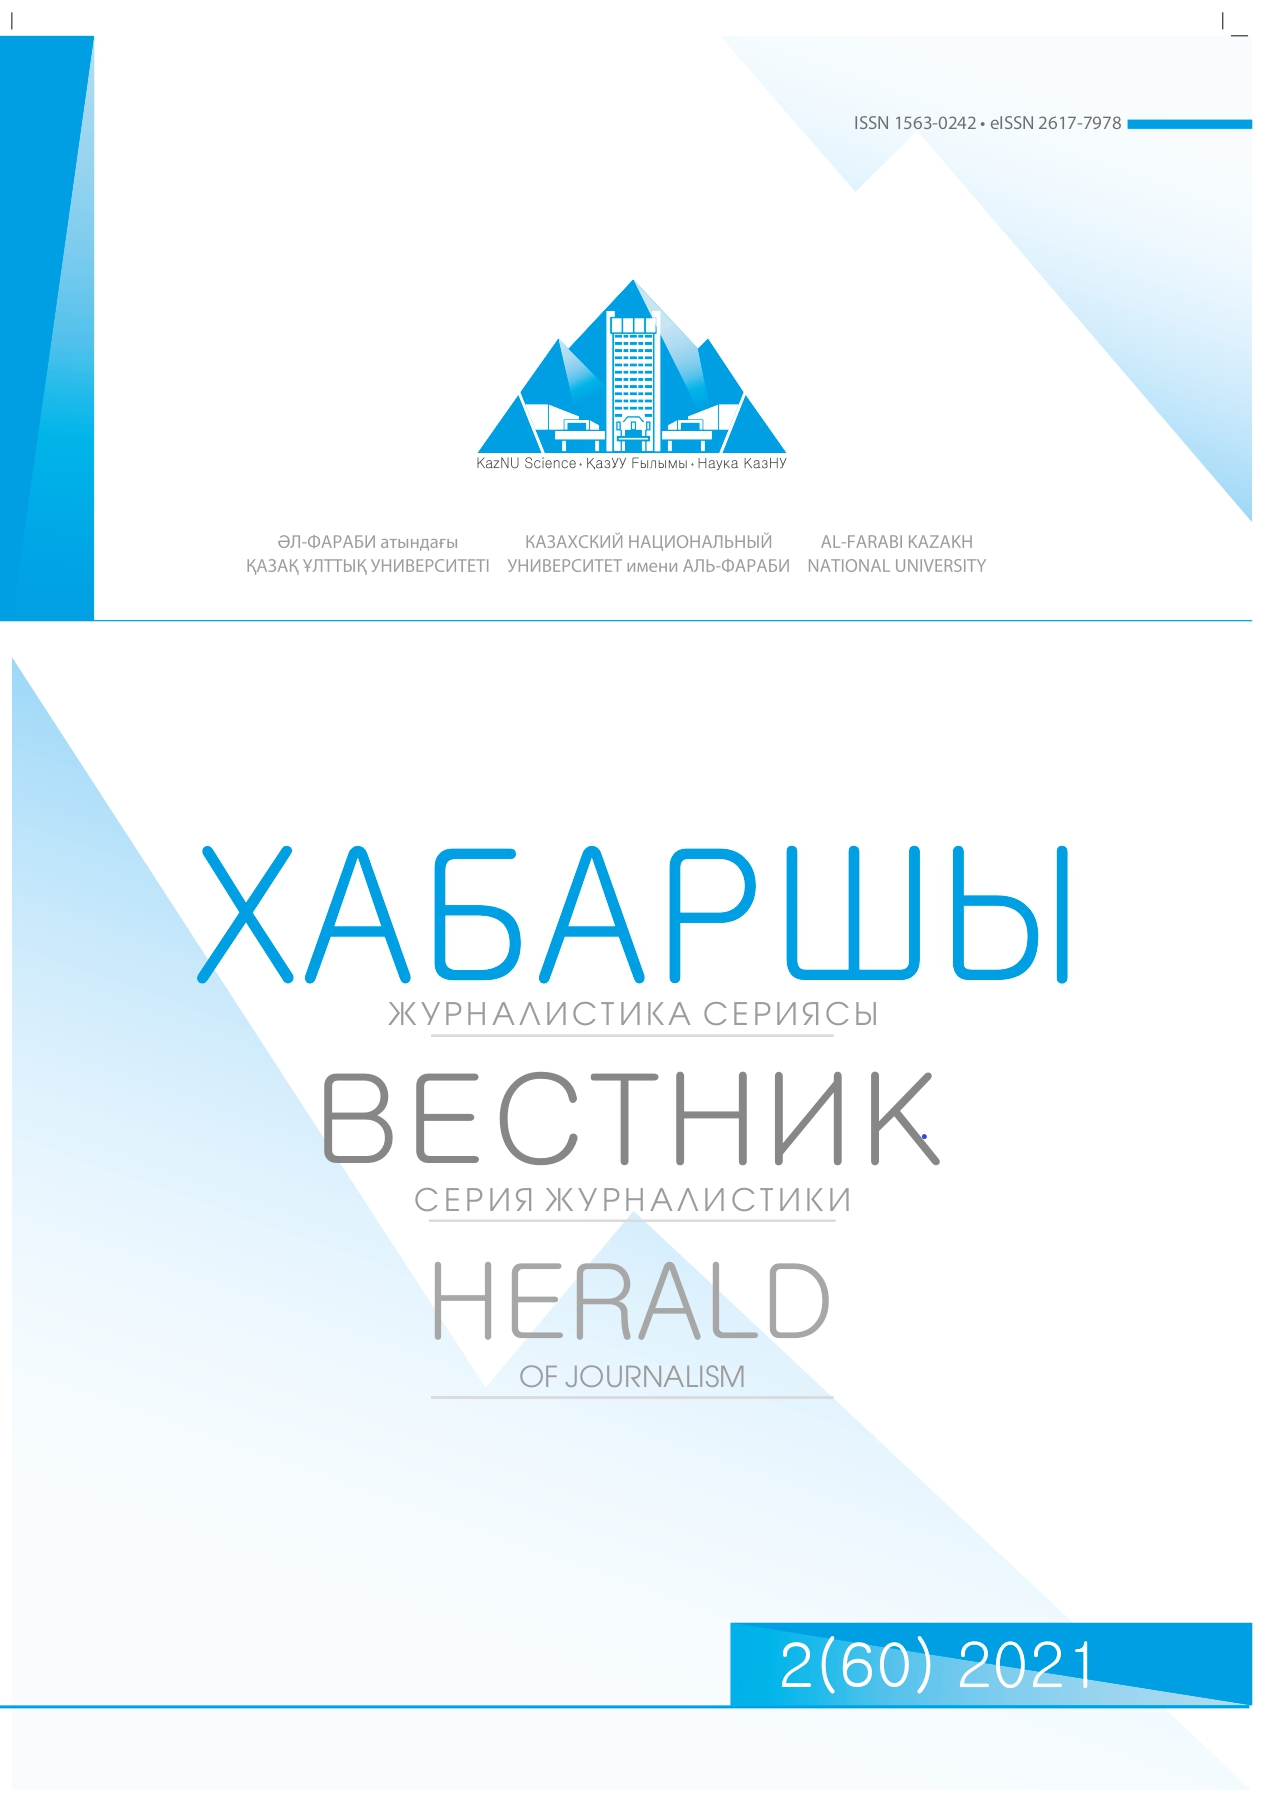 					View Vol. 60 No. 2 (2021): Al-Farabi kazakh national university. Herald of journalism
				